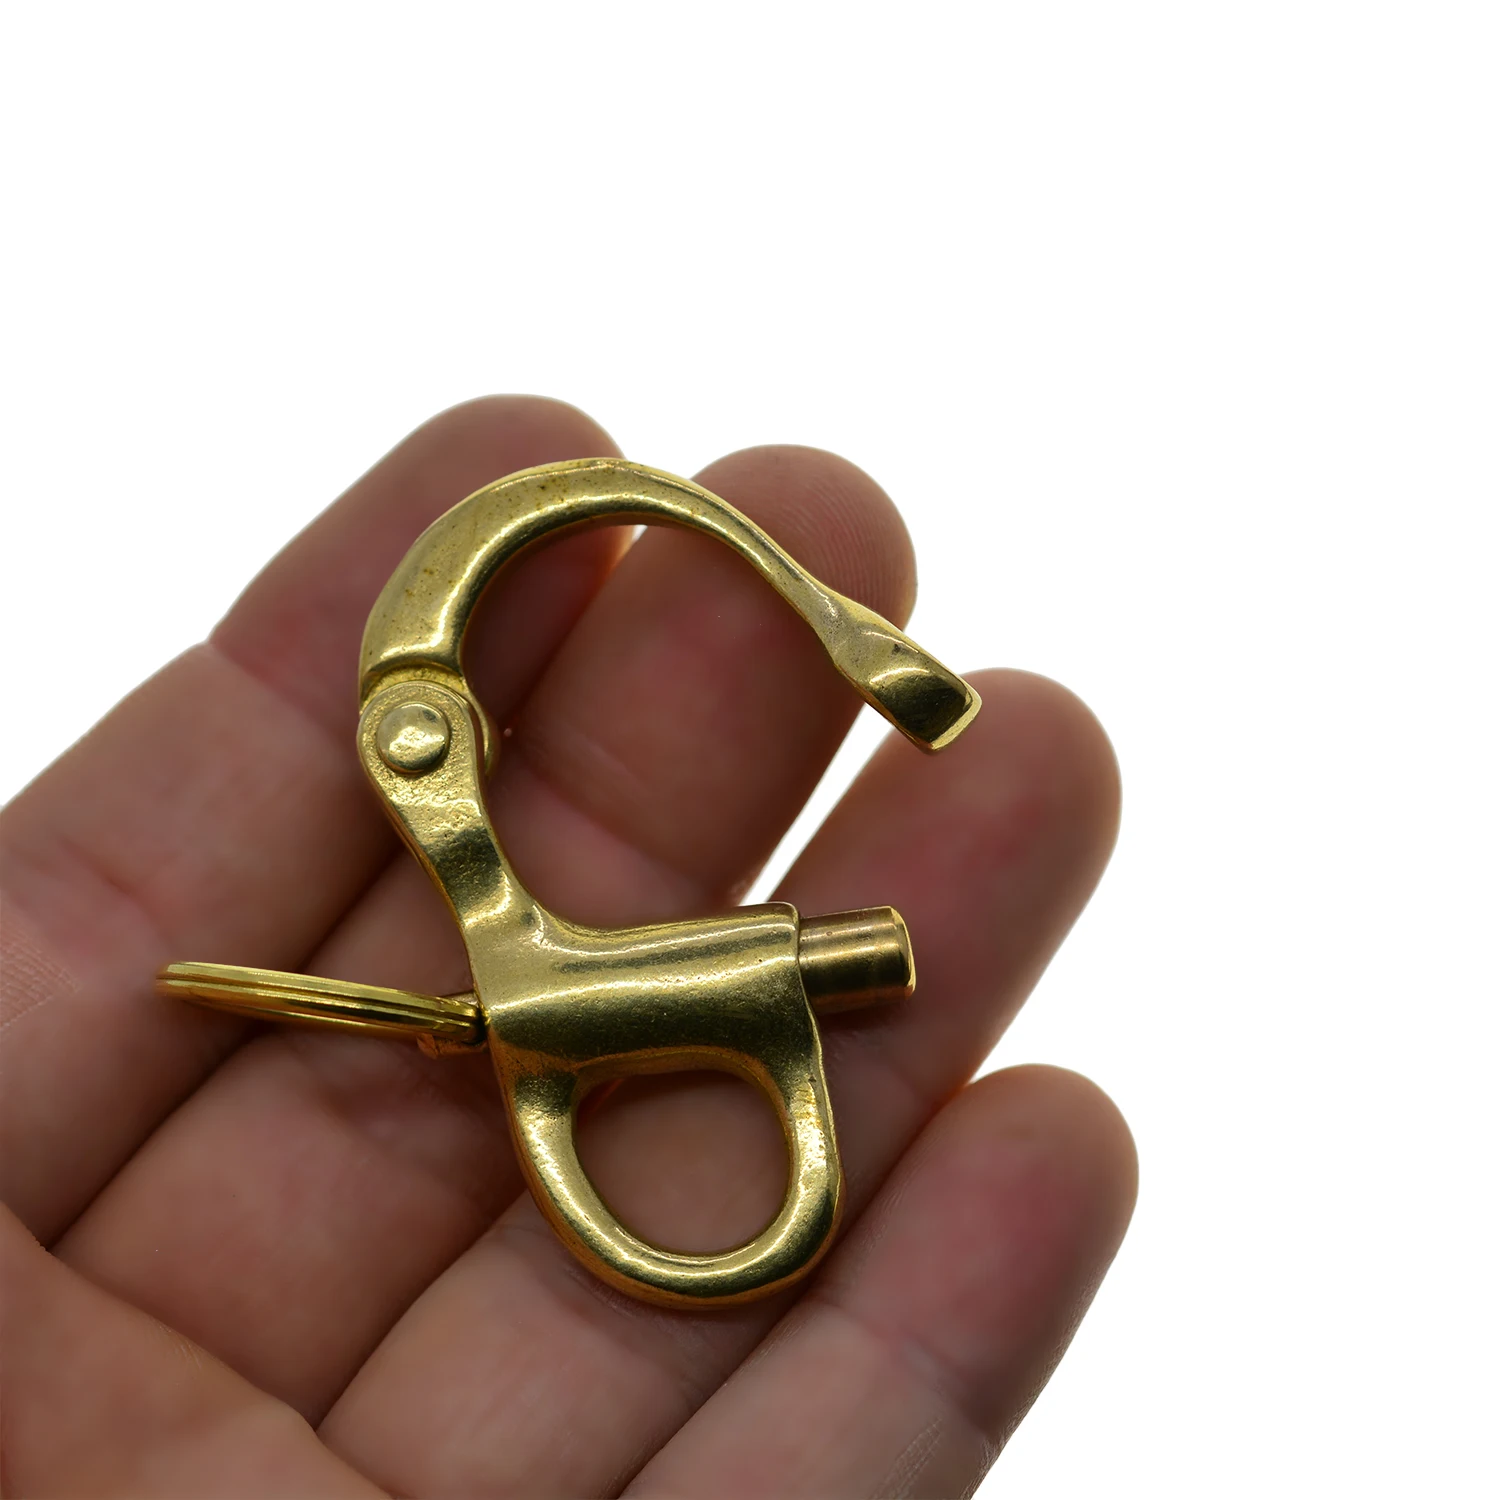 Heavy Duty Boat Snap Clip Key Ring - Solid Brass